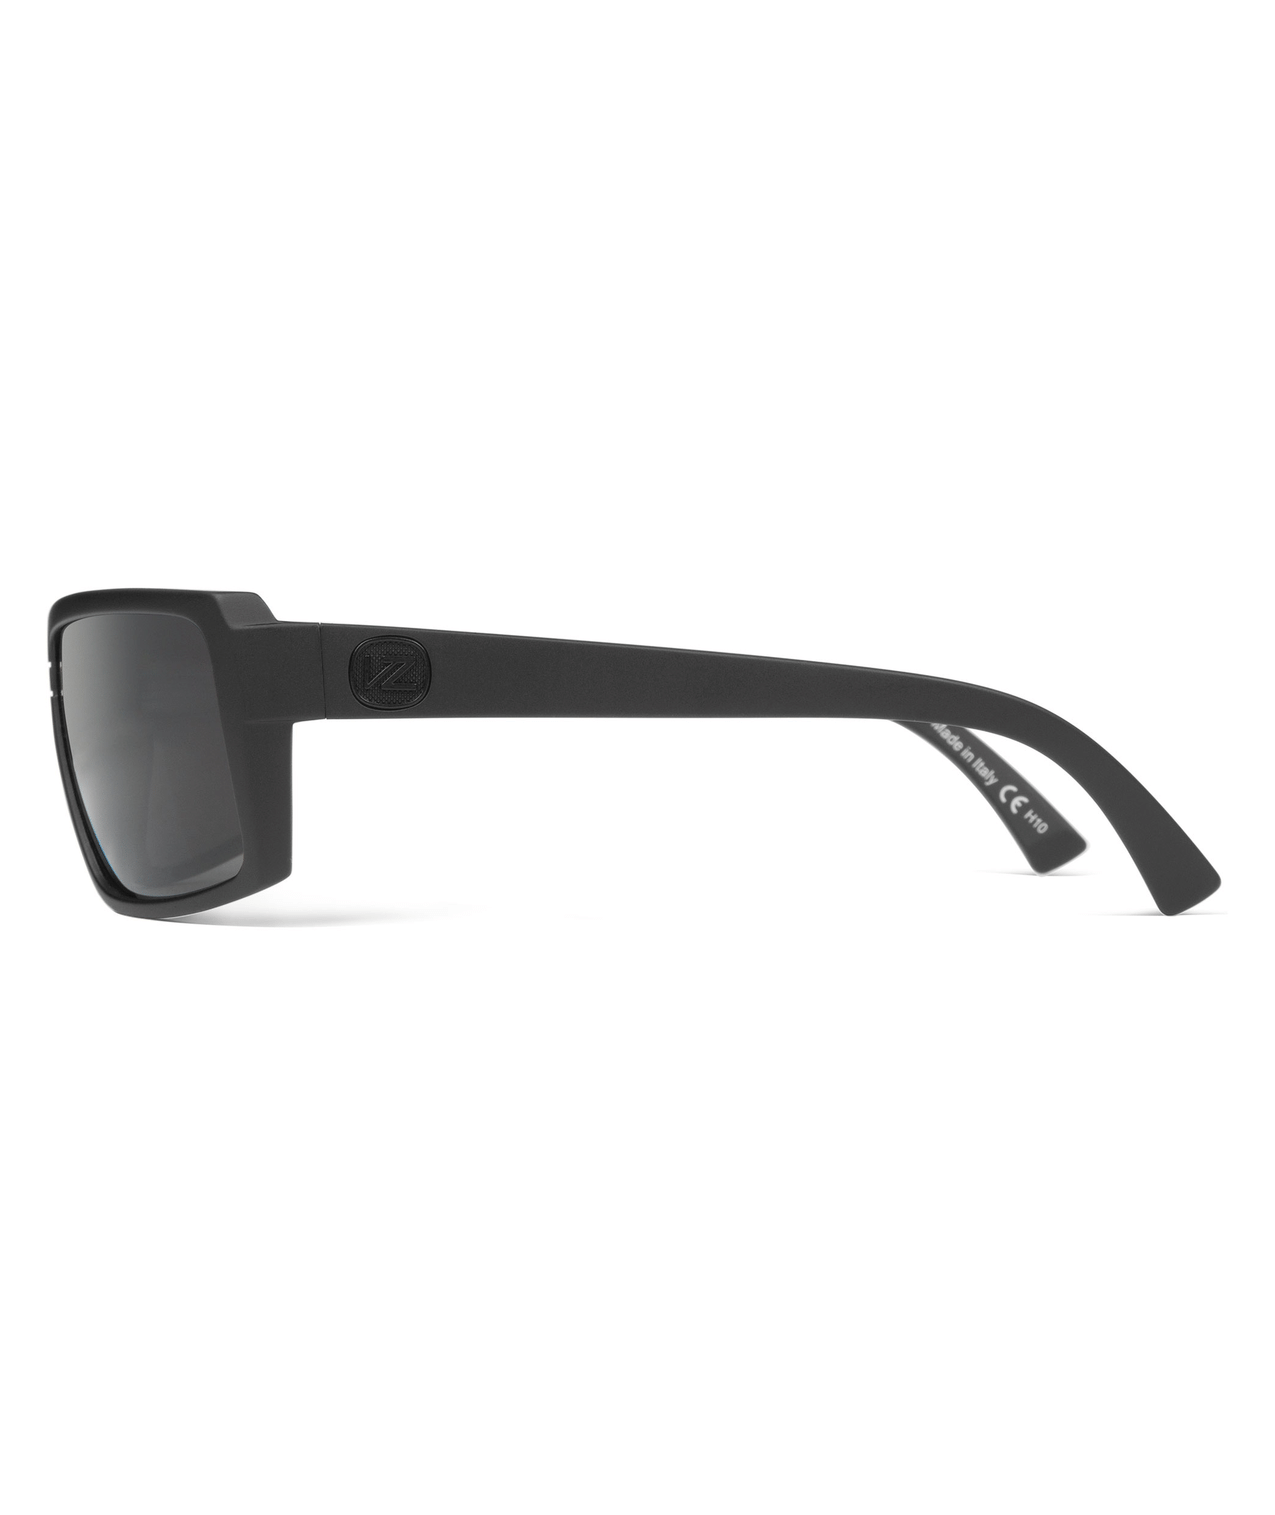 Von Zipper Sunglasses - SNARK POLAR